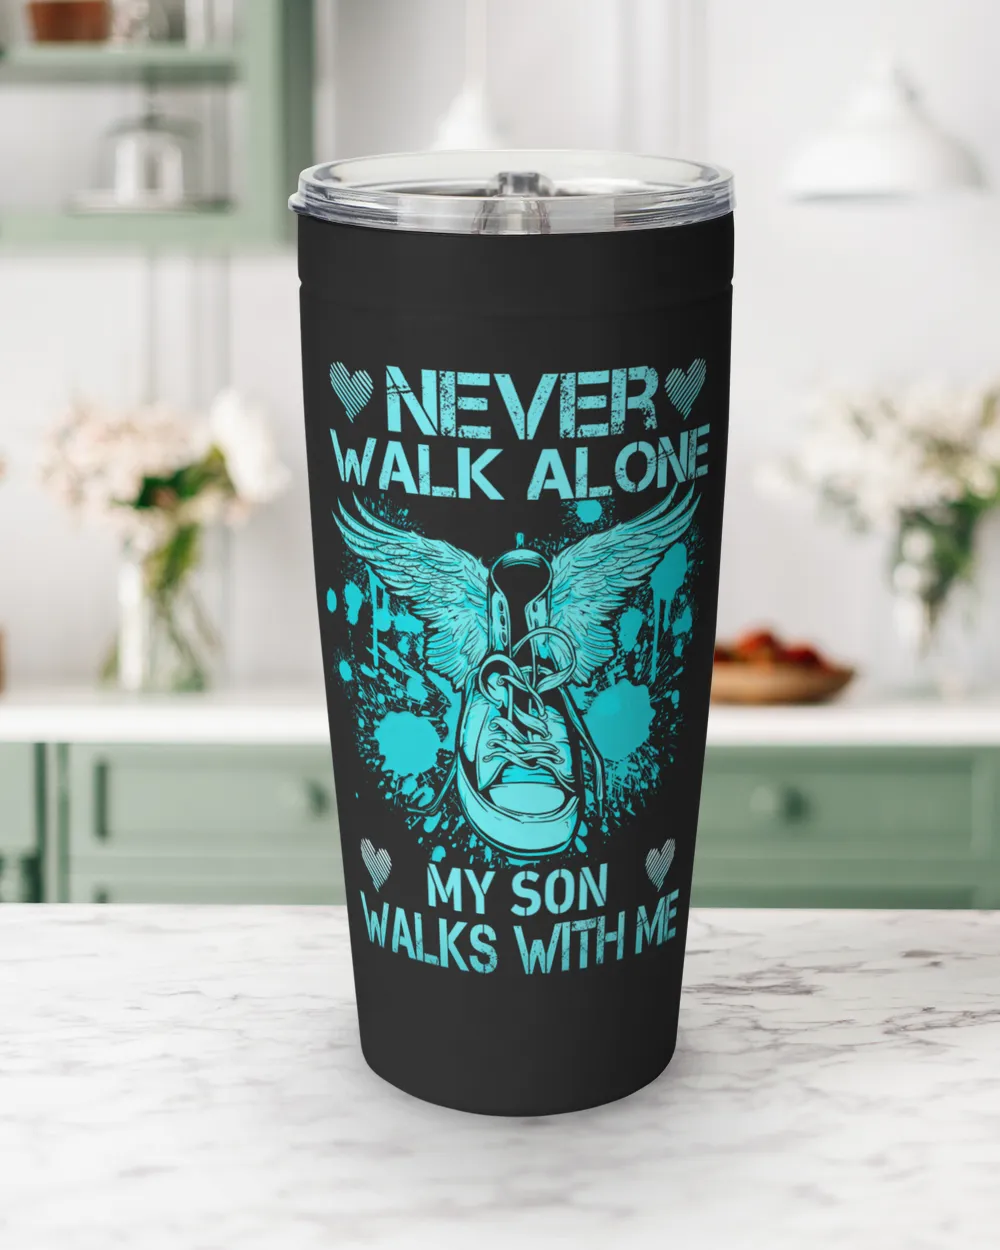 [Personalize] Never walk alone